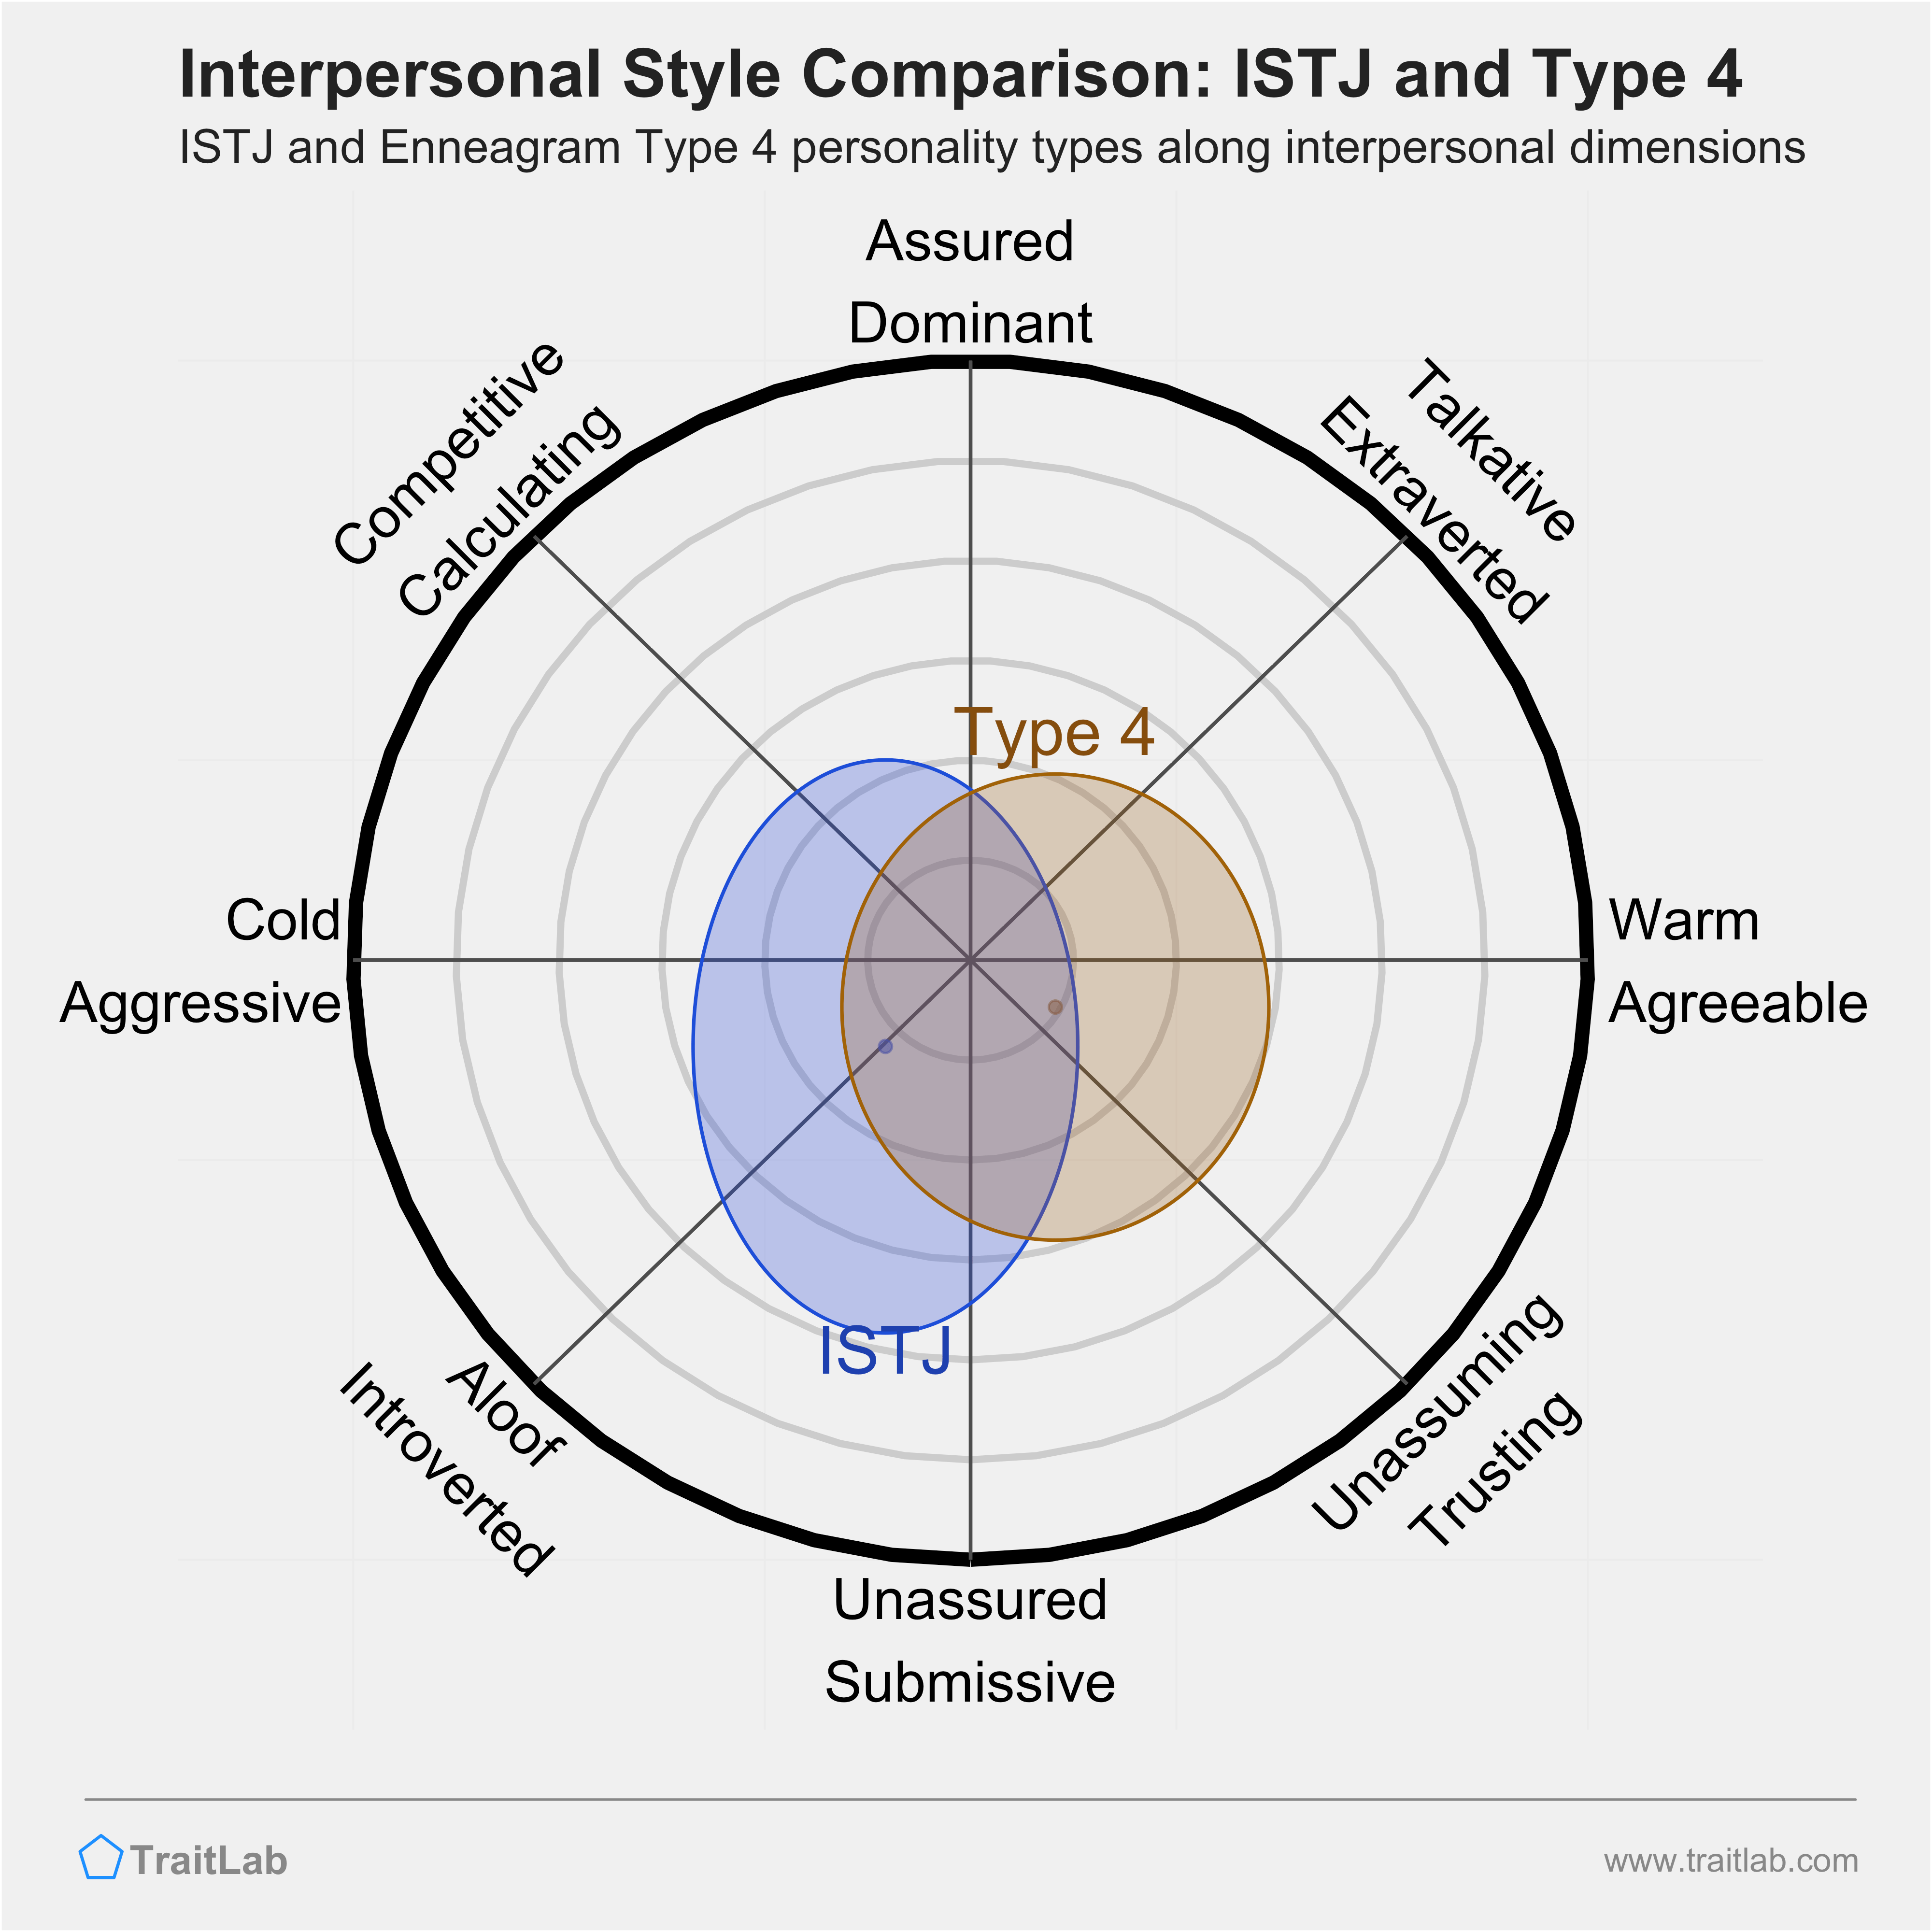 Enneagram ISTJ and Type 4 comparison across interpersonal dimensions